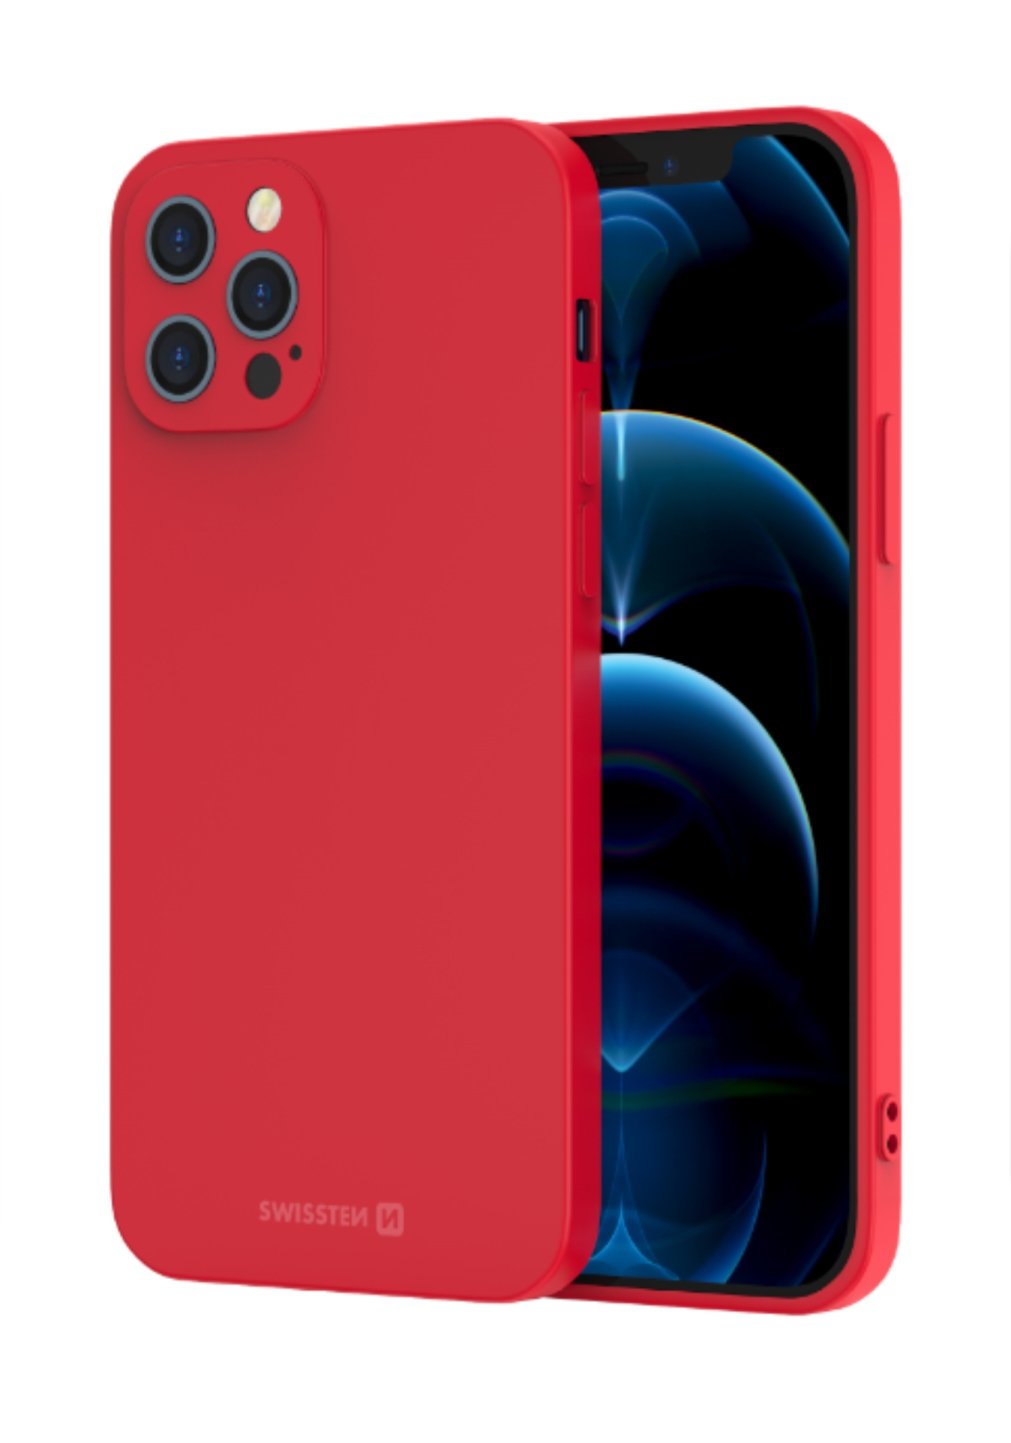 Swissten iPhone 12 Pro Max Soft Joy Case - 34500172 - Red